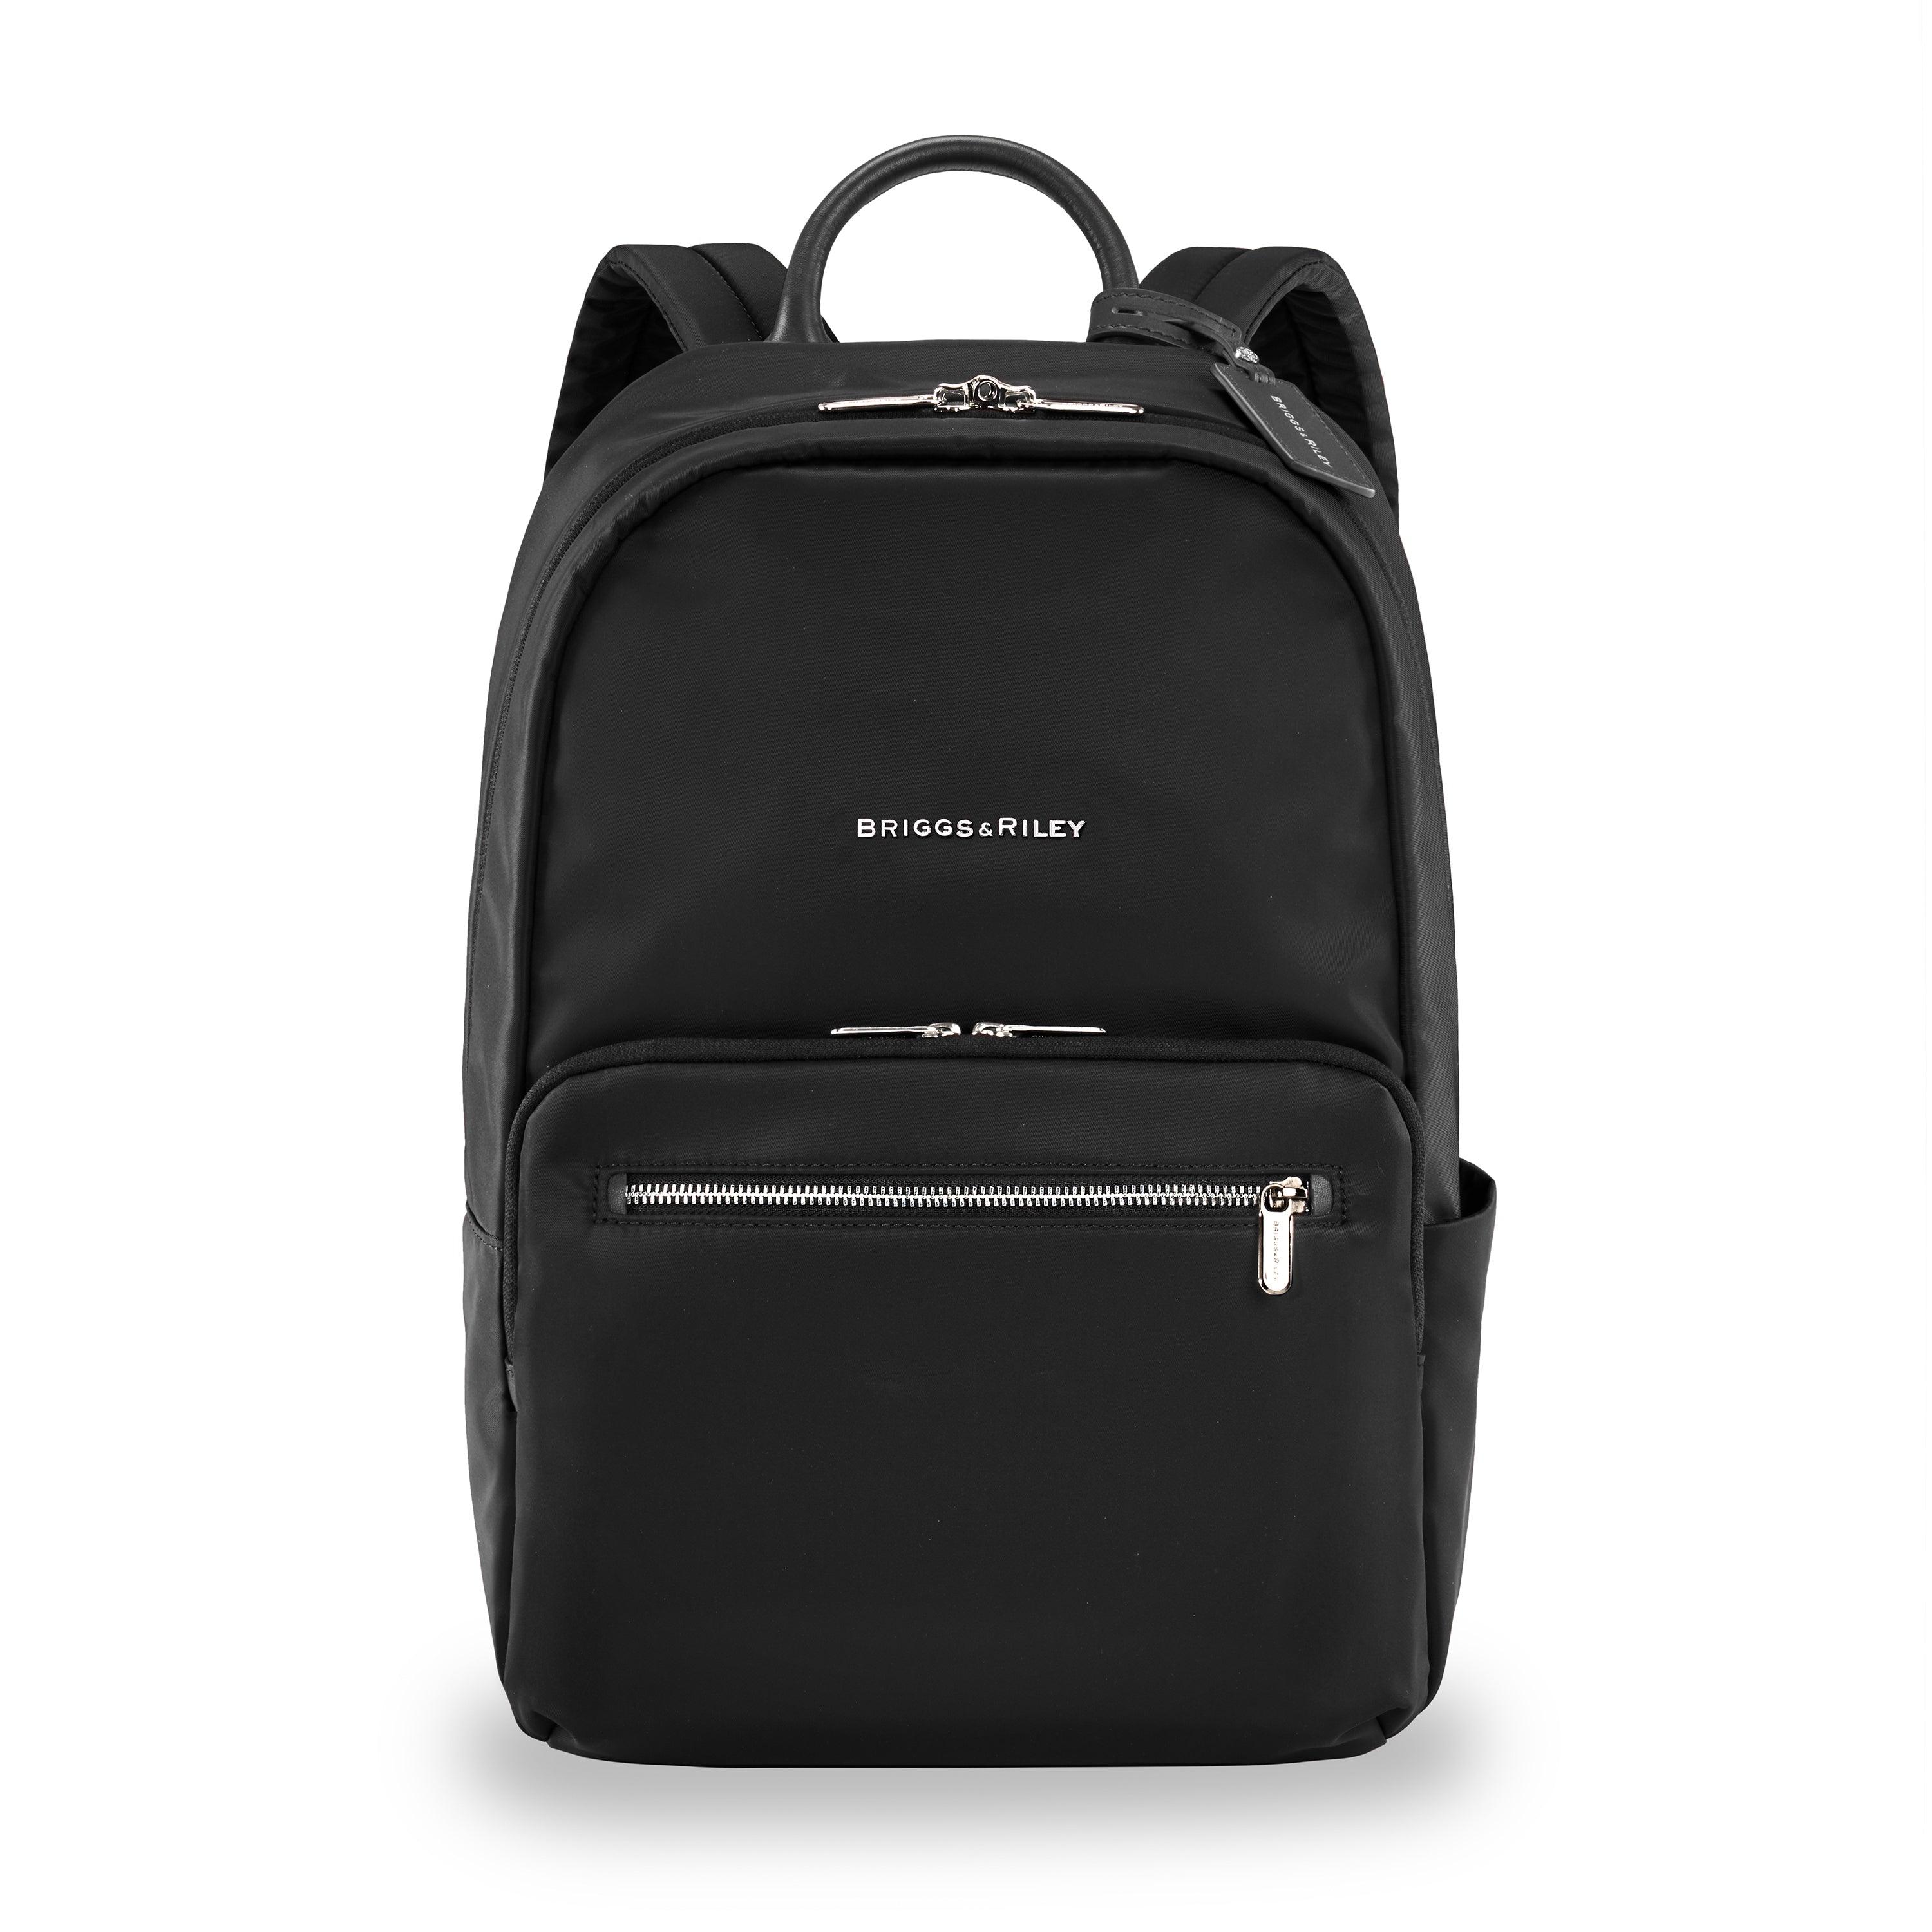 Rhapsody Essential Backpack - Voyage Luggage